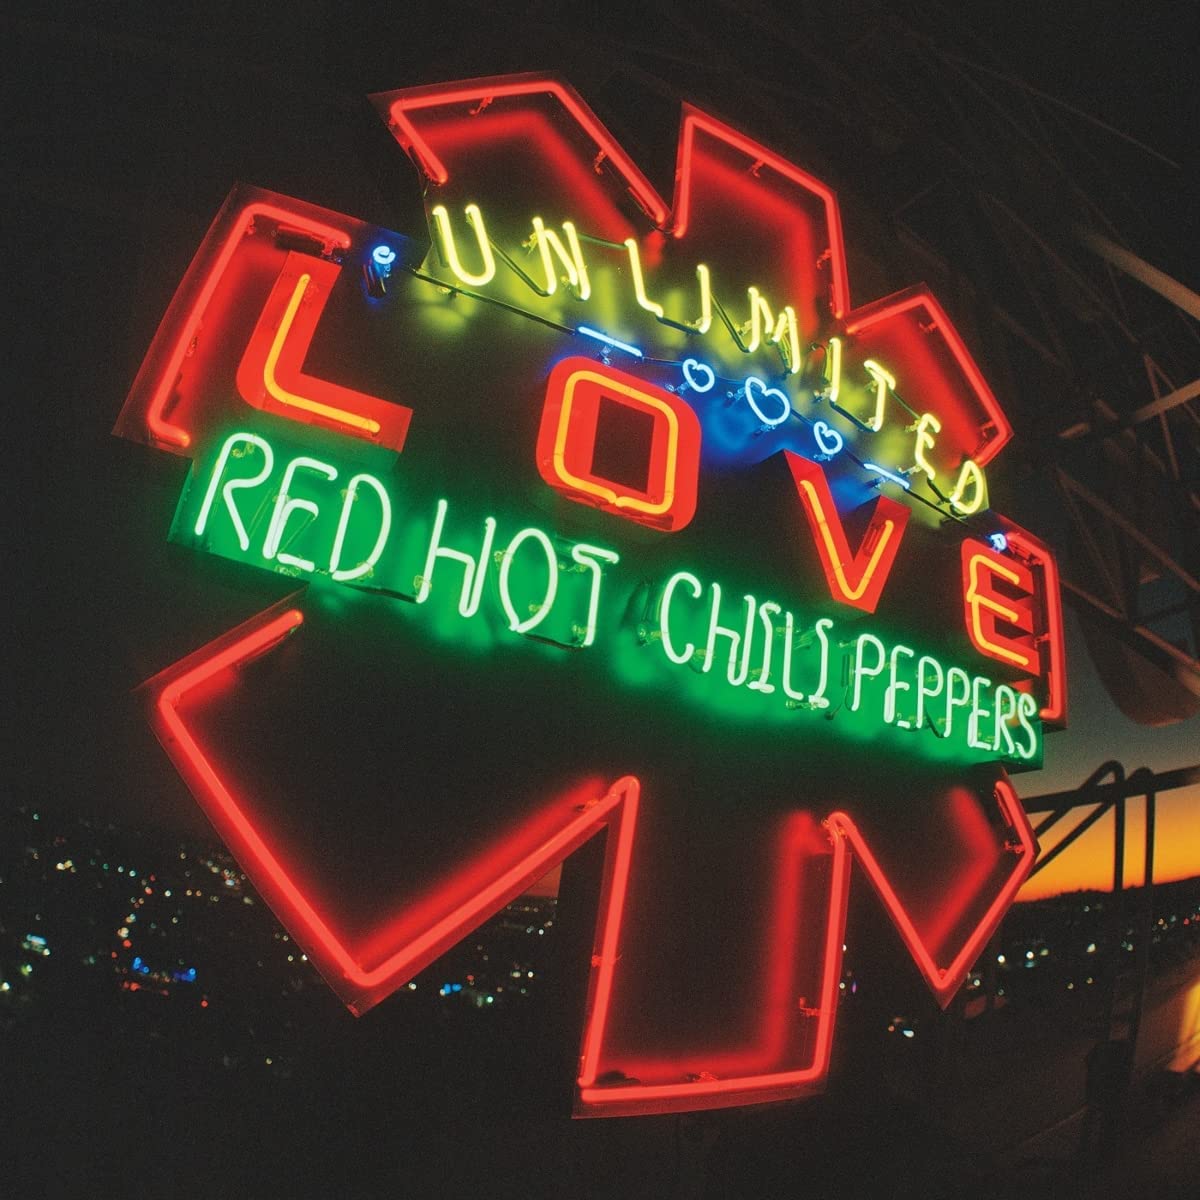 These Are the Ways - Red Hot Chili Peppers - Testo e Traduzione